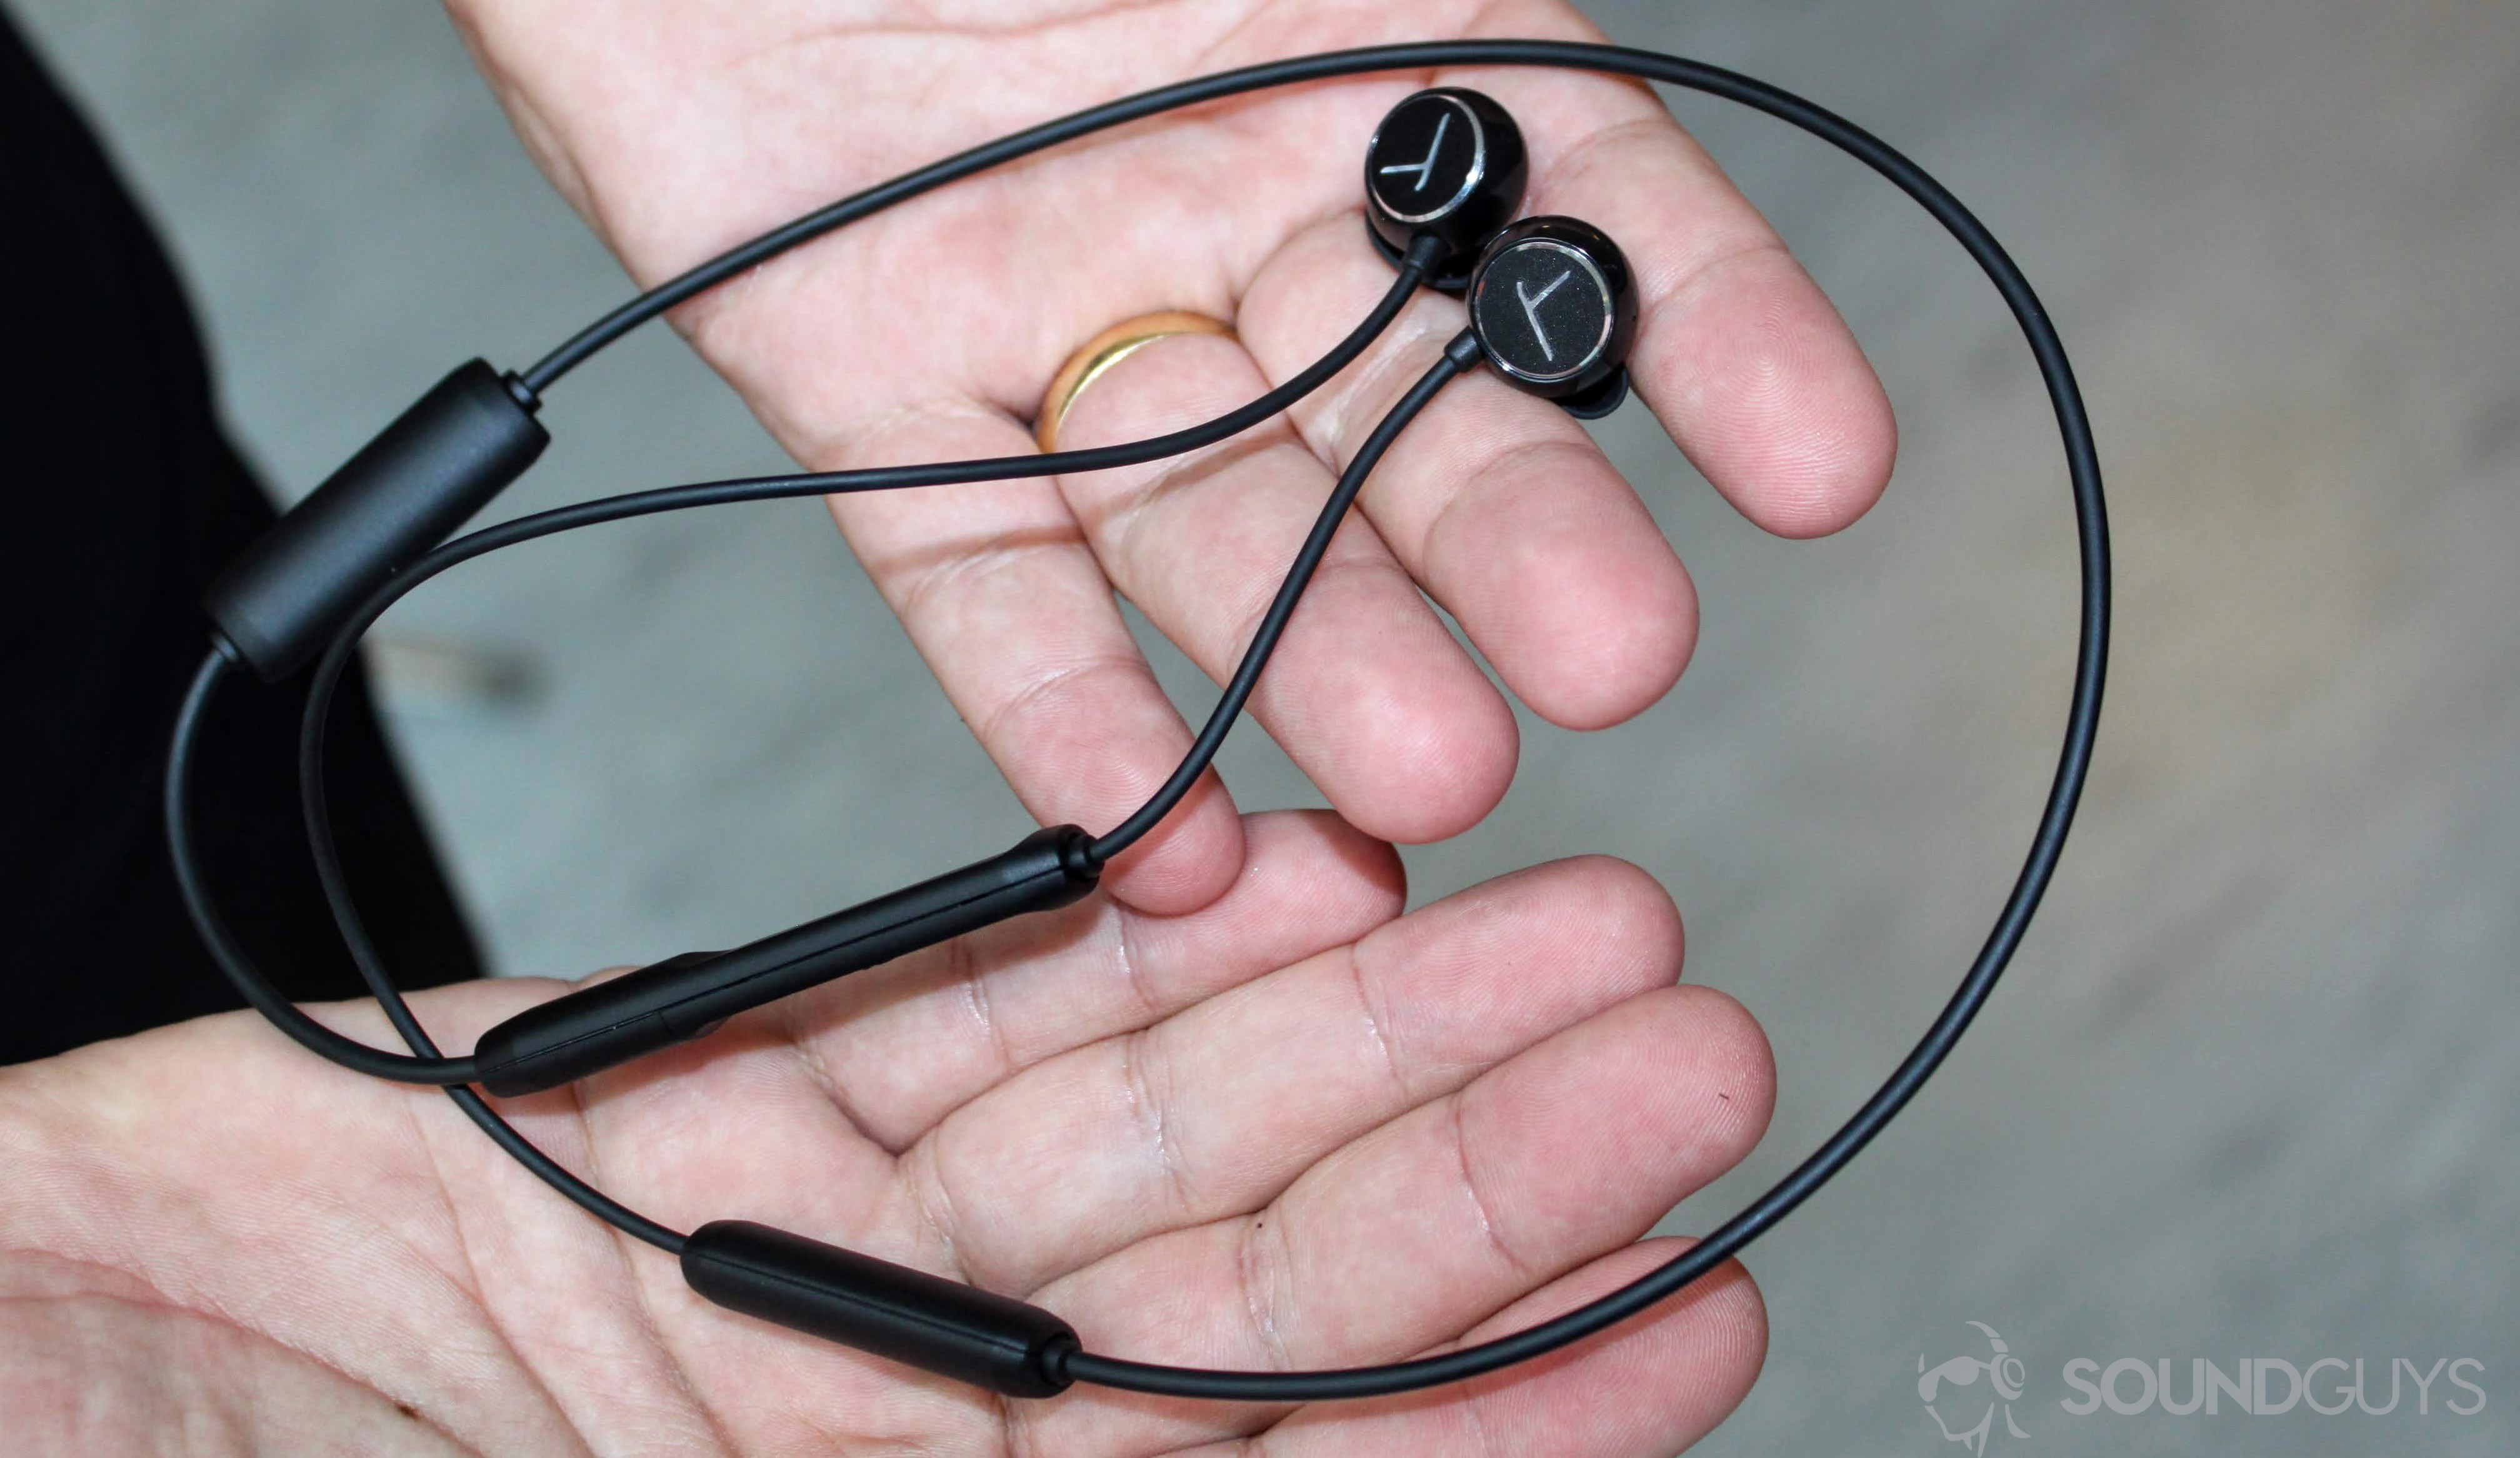 beyerdynamic headphones in a person's hand.